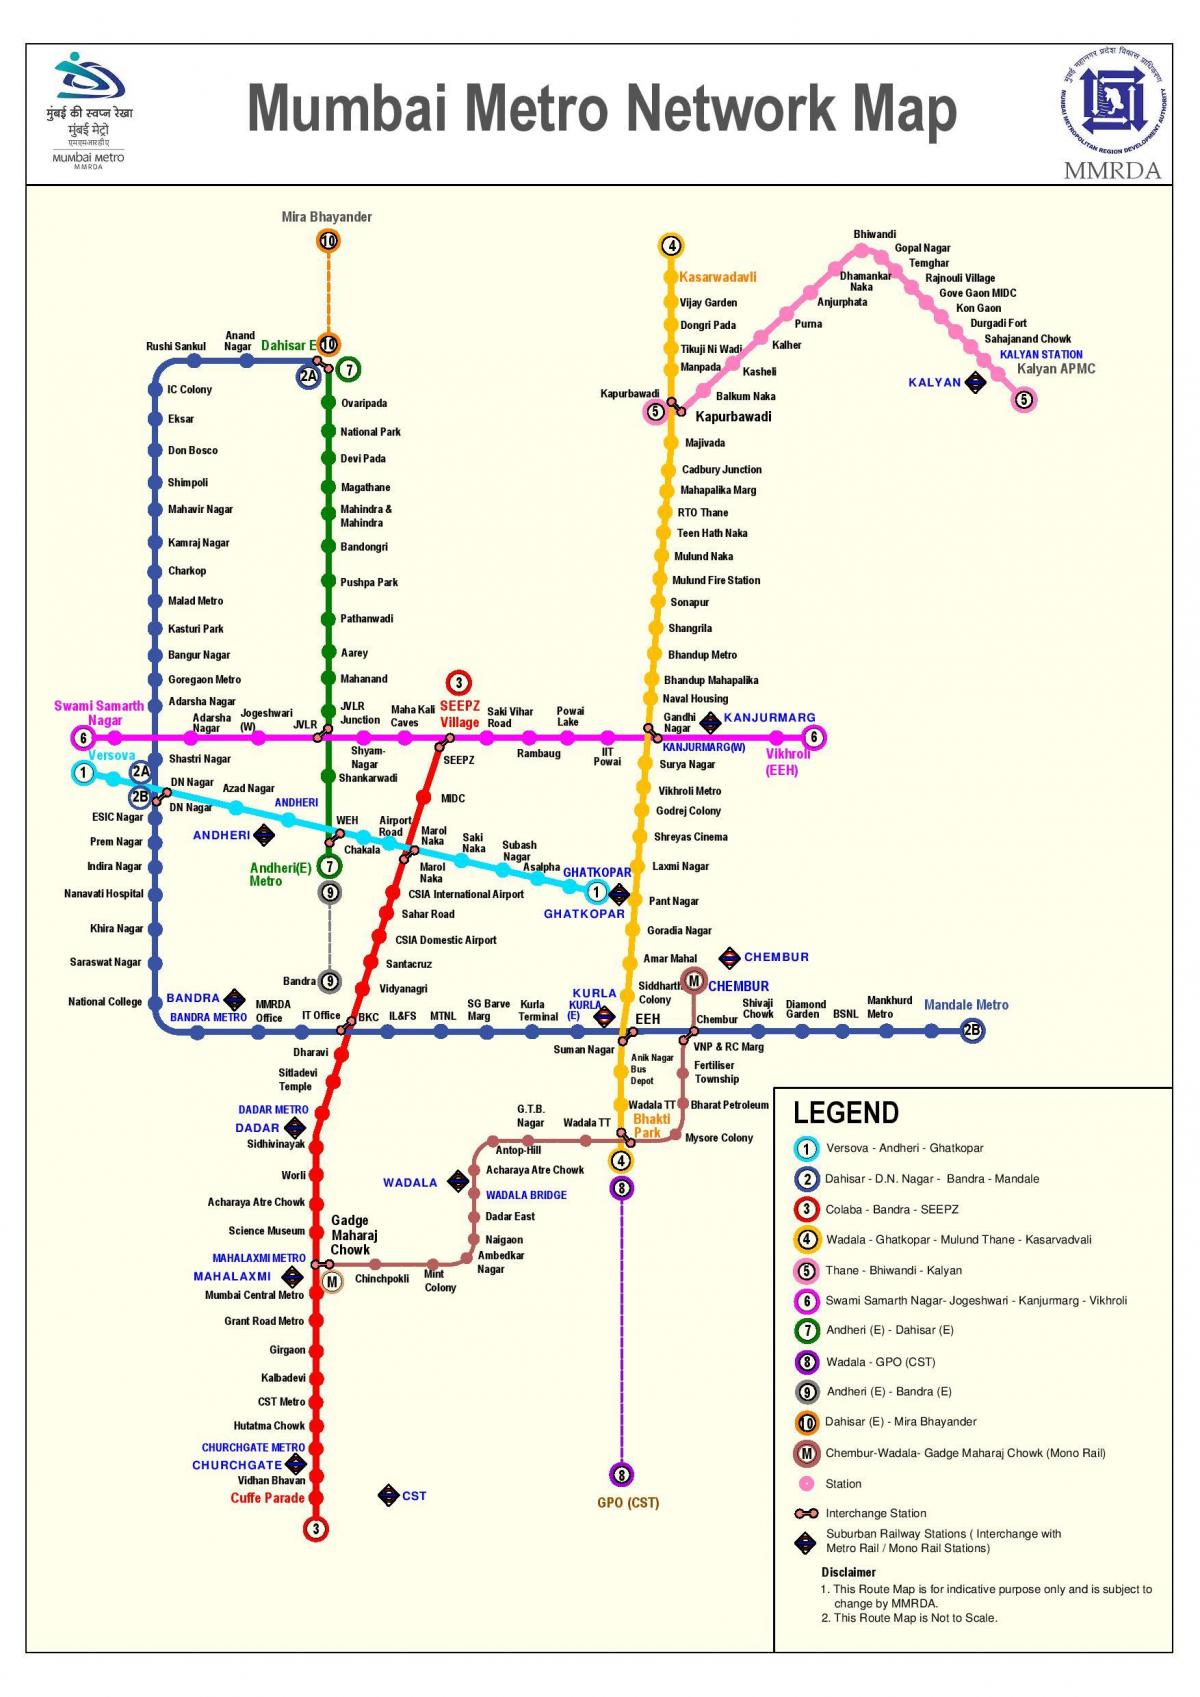 Mumbajus metro stotis map